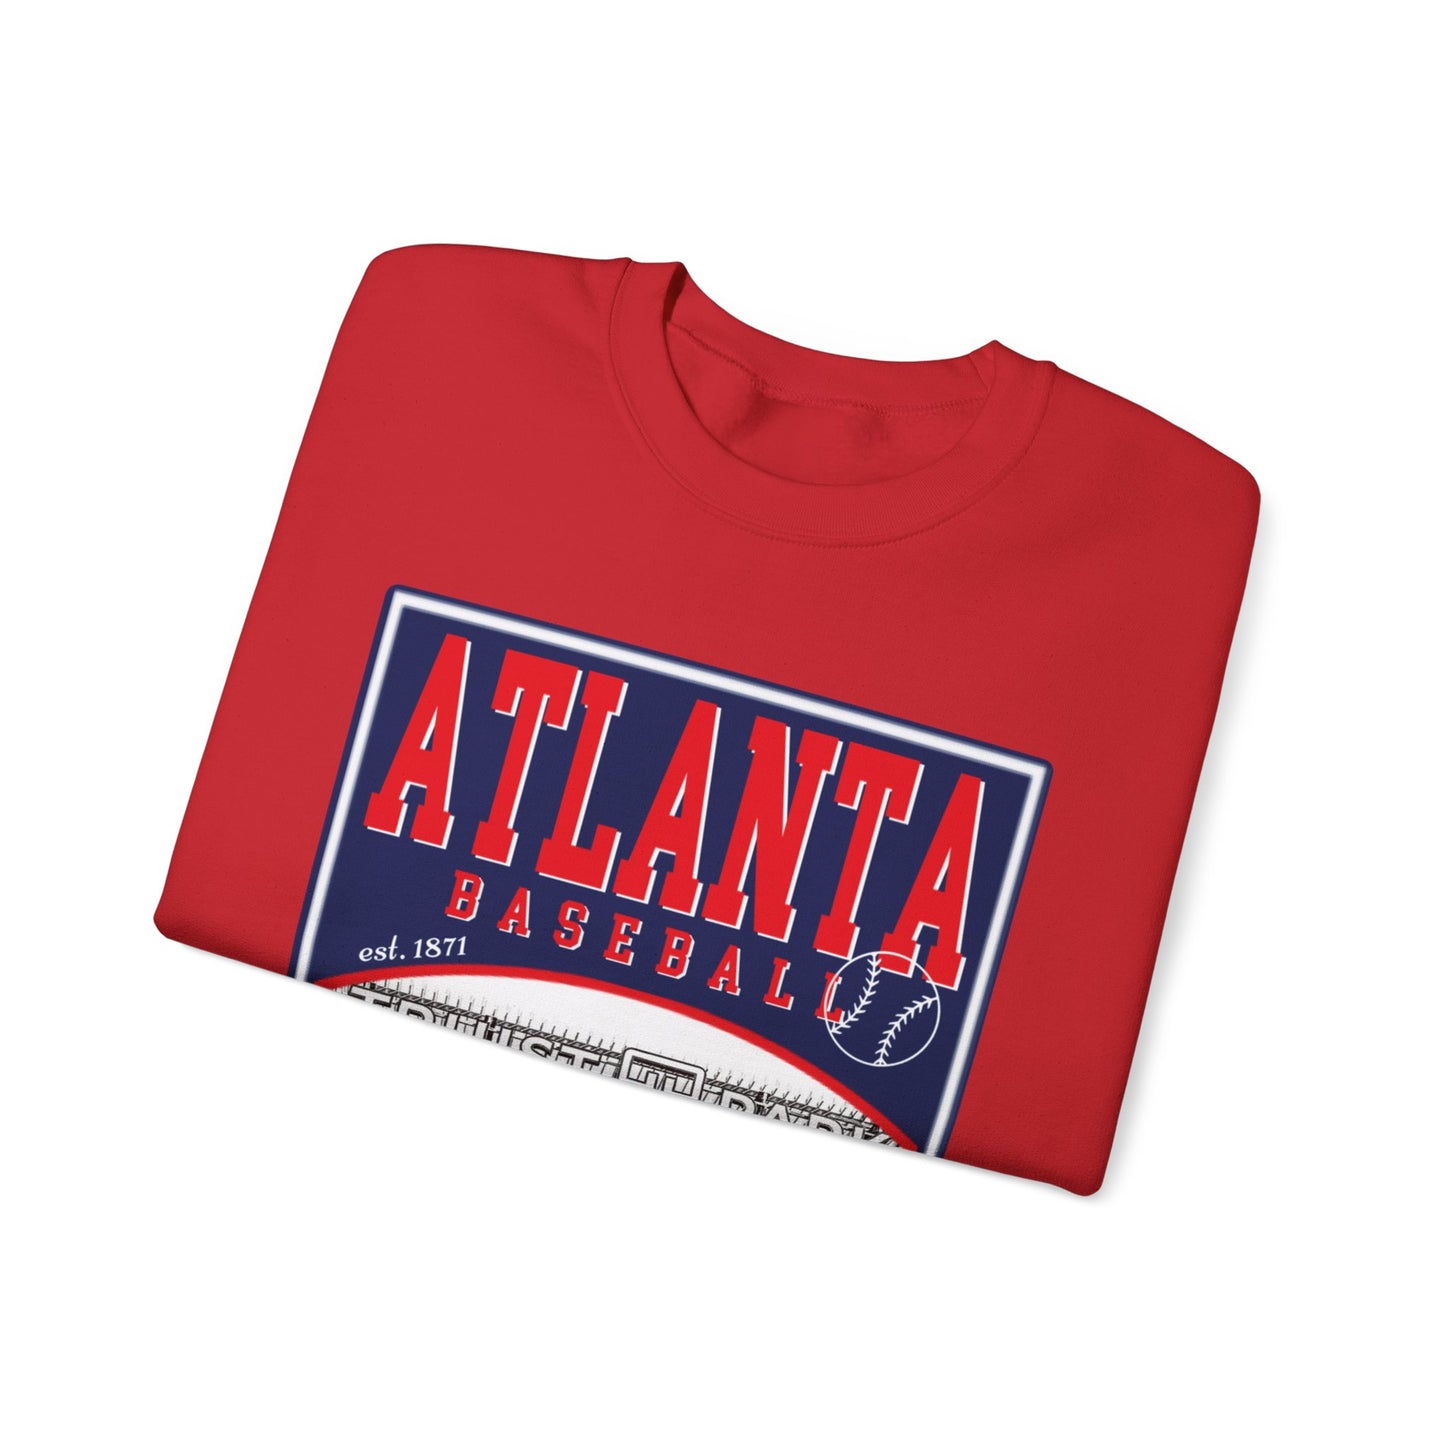 Atlanta Braves Baseball Sweatshirt